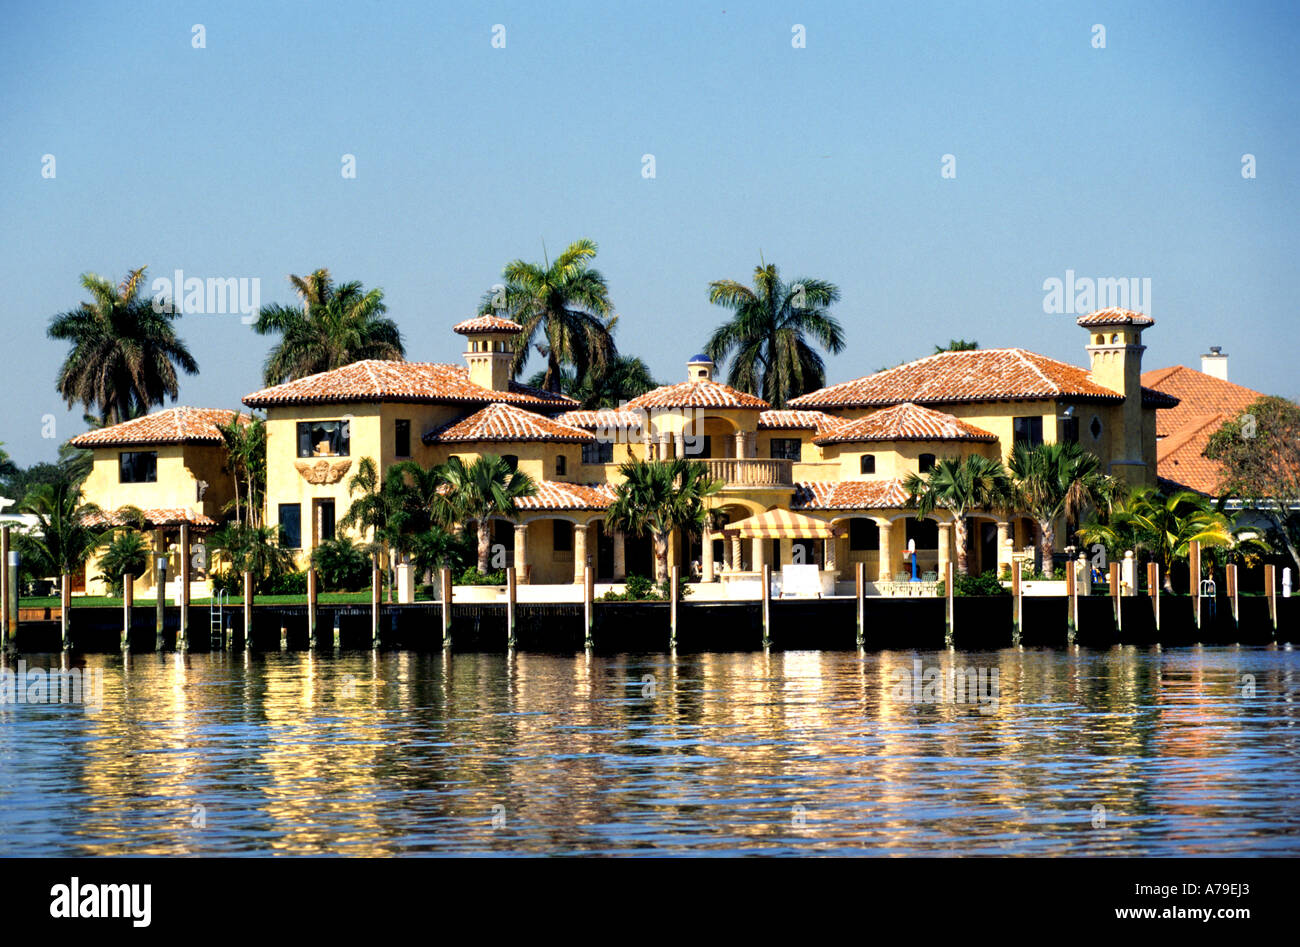 Palm Beach Boot Yacht Florida Villa Villa Immobilien Stockfoto